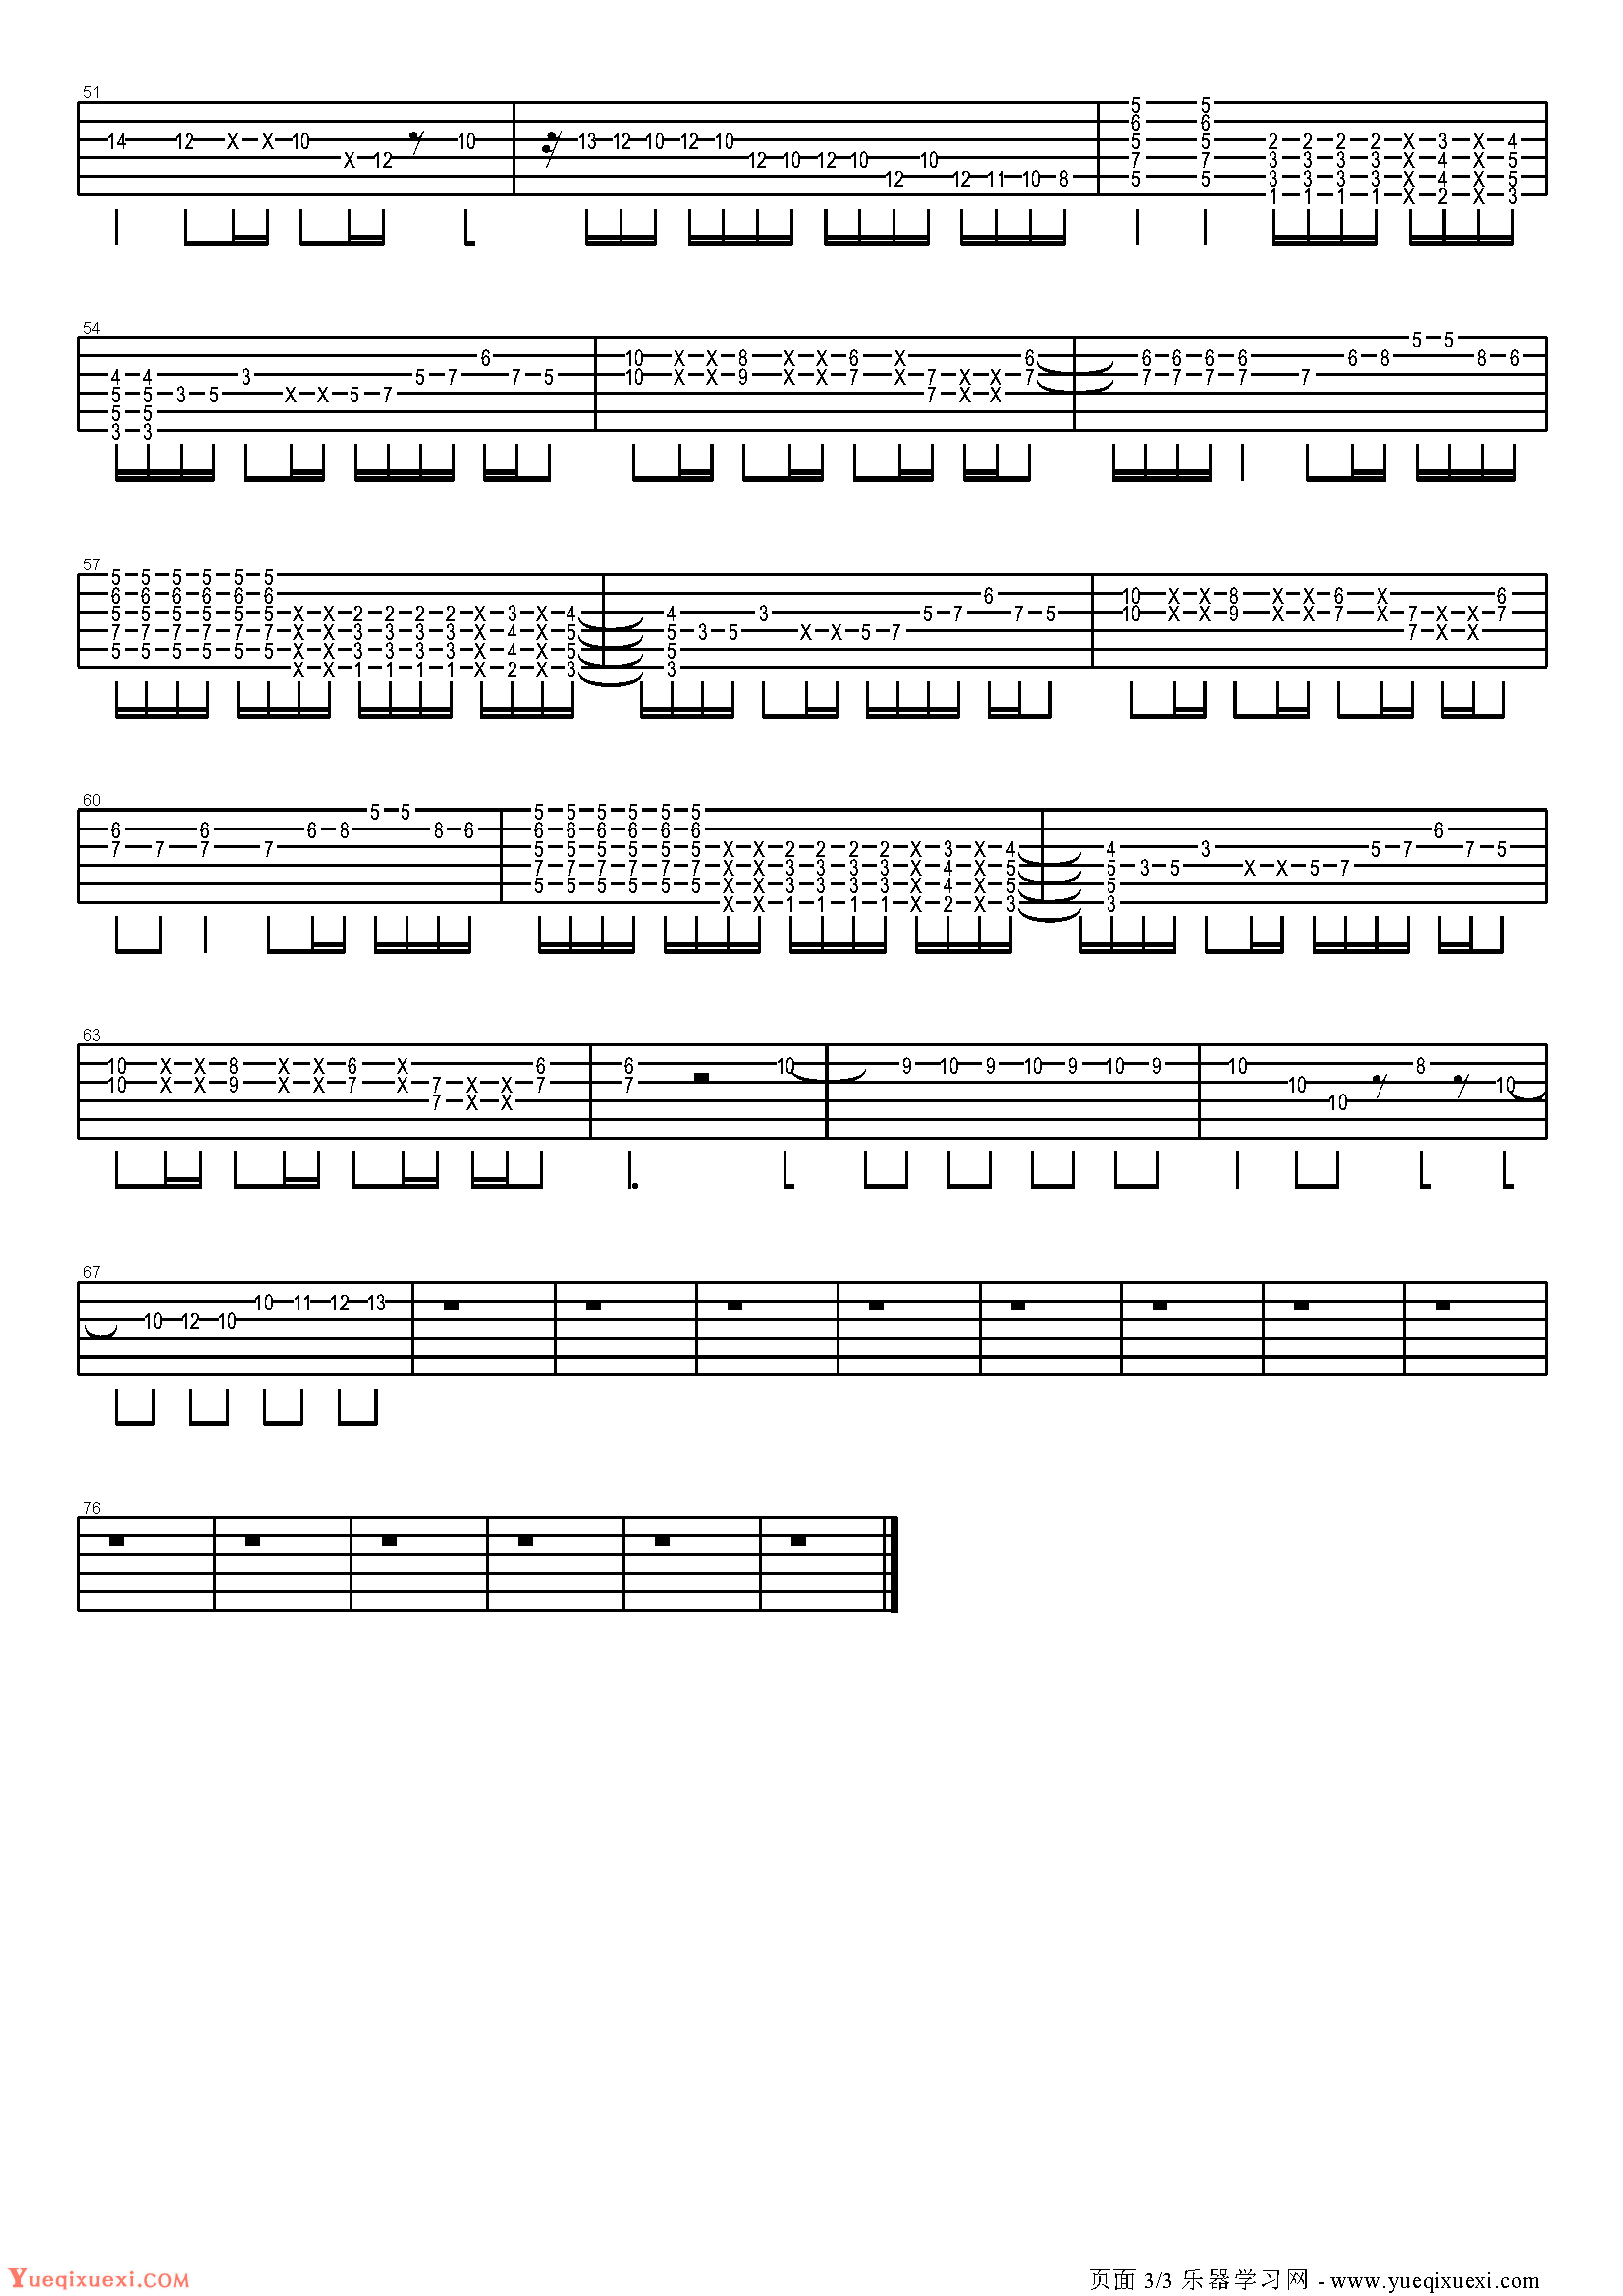 DEPAPEPE吉他谱【桜風】高清图片谱-吉他曲谱 - 乐器学习网